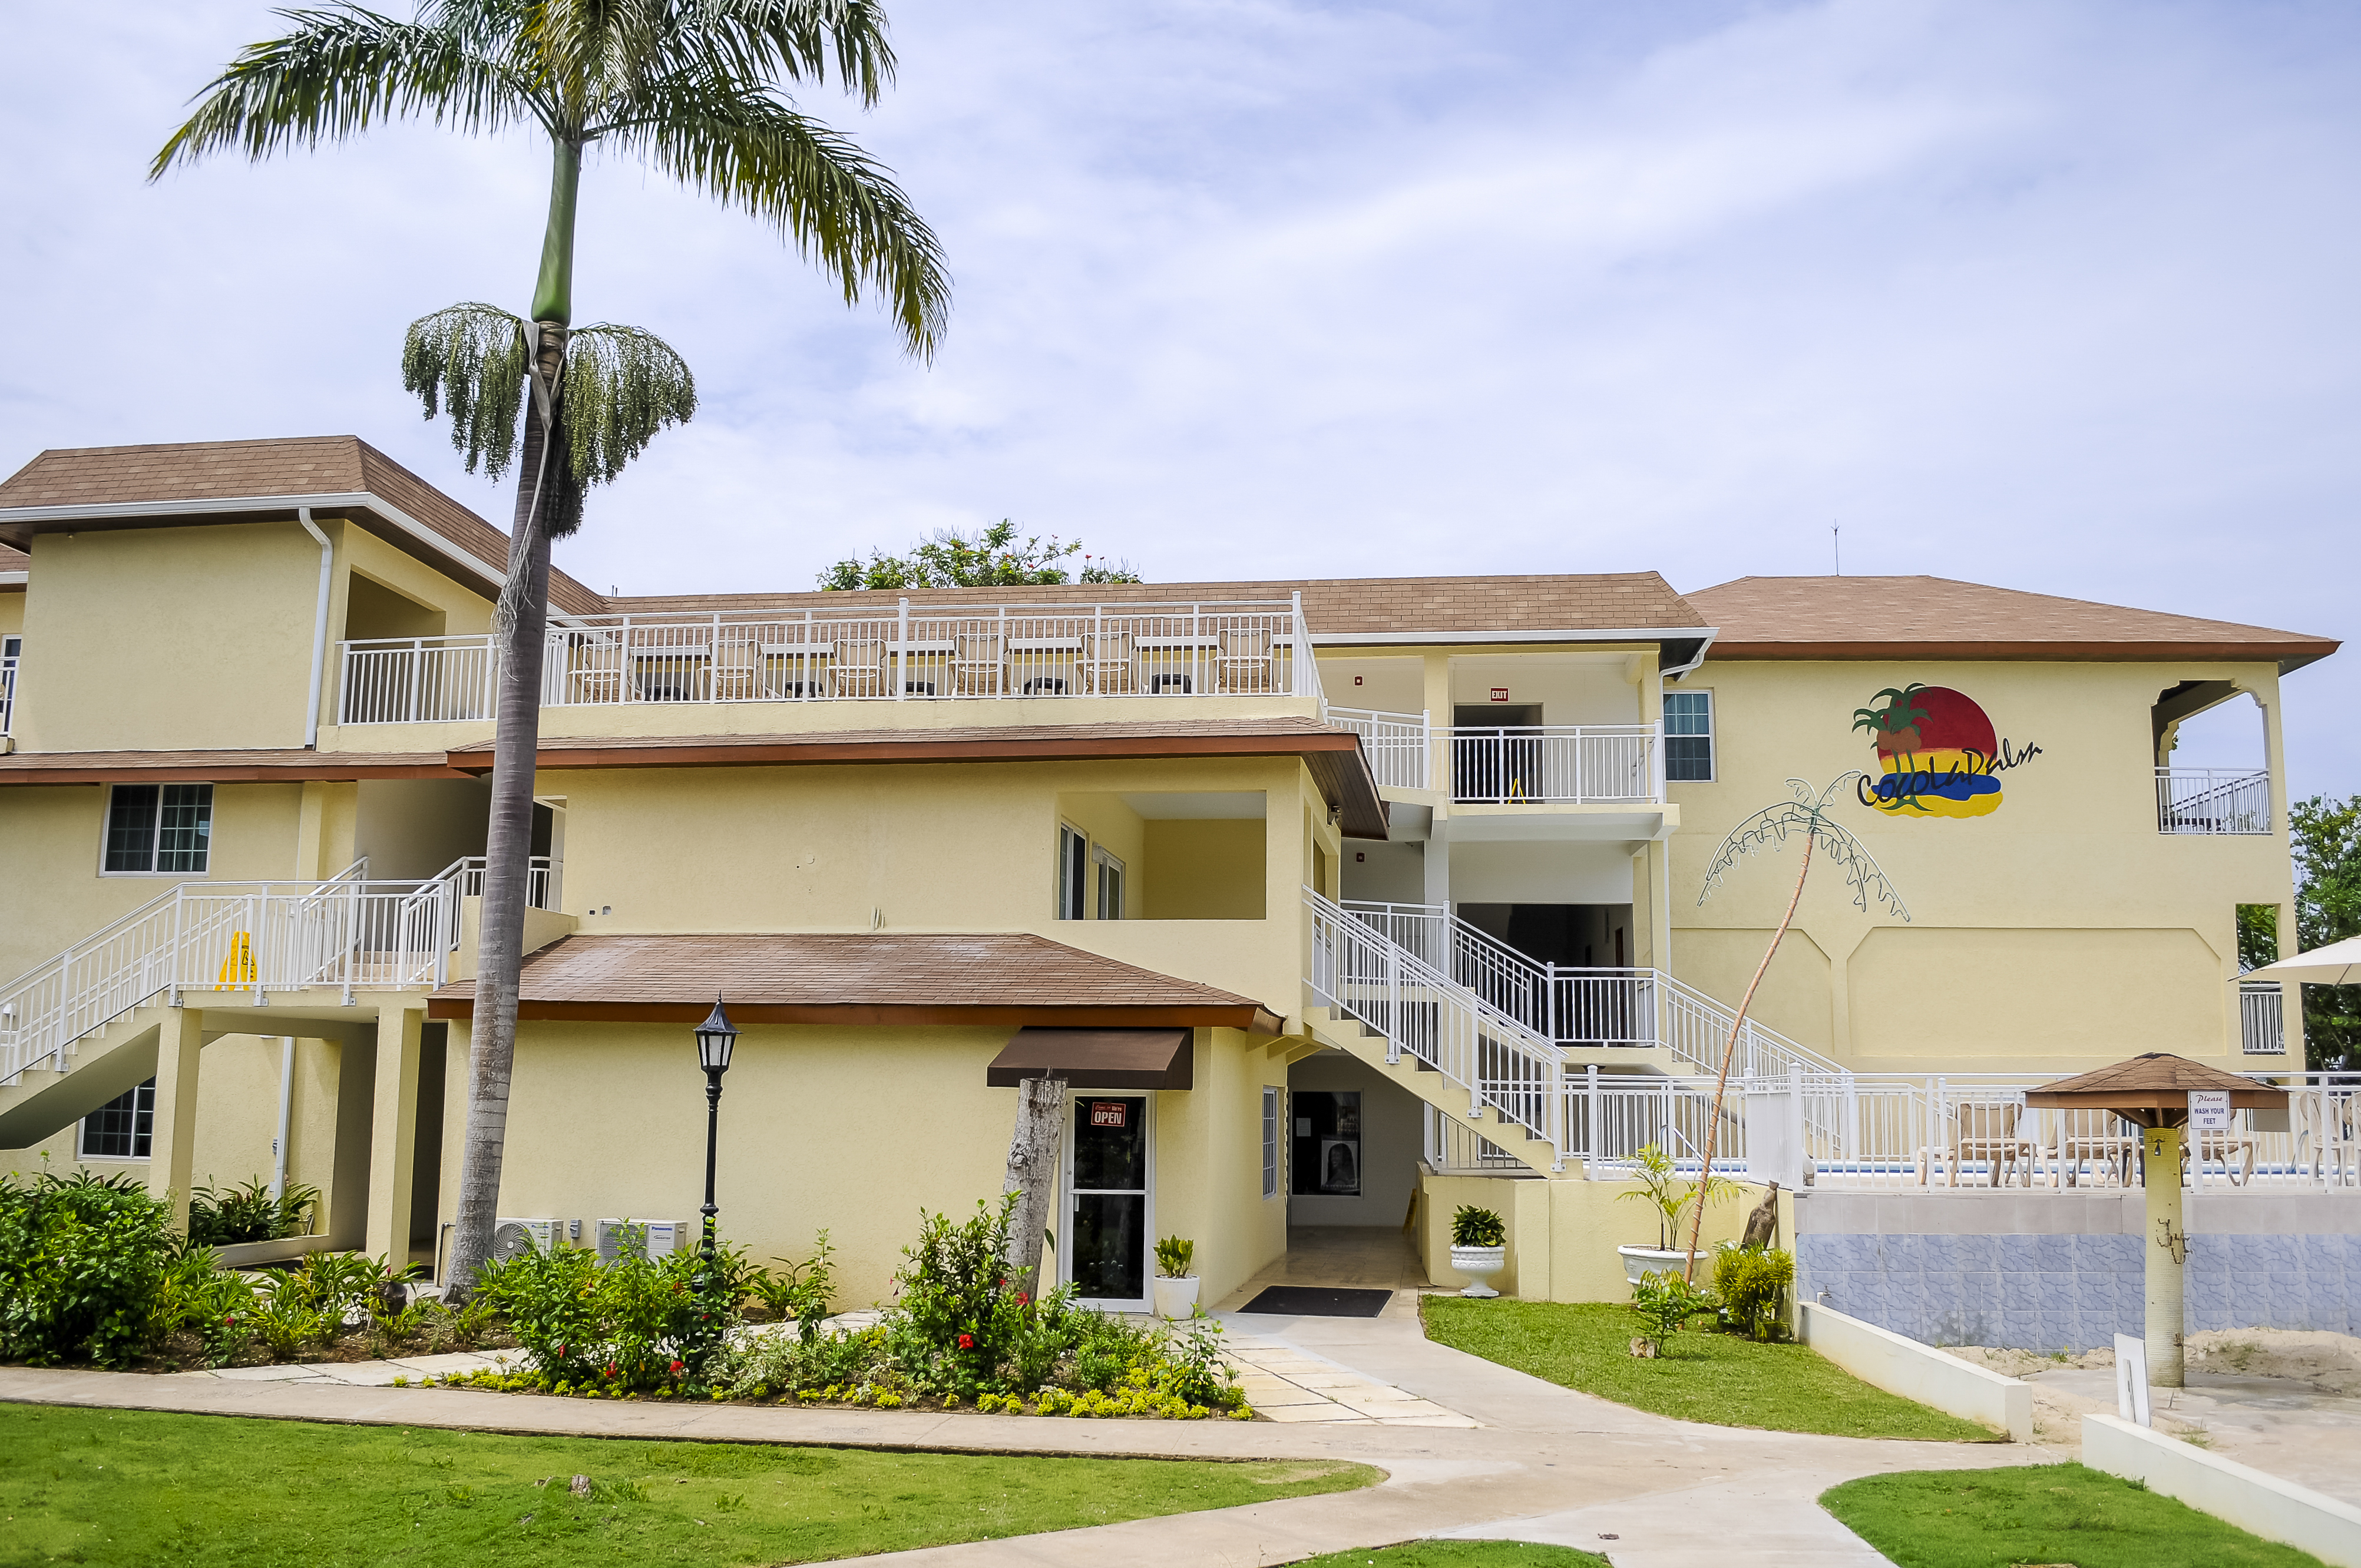 Coco La Palm Seaside Resort Hotel image